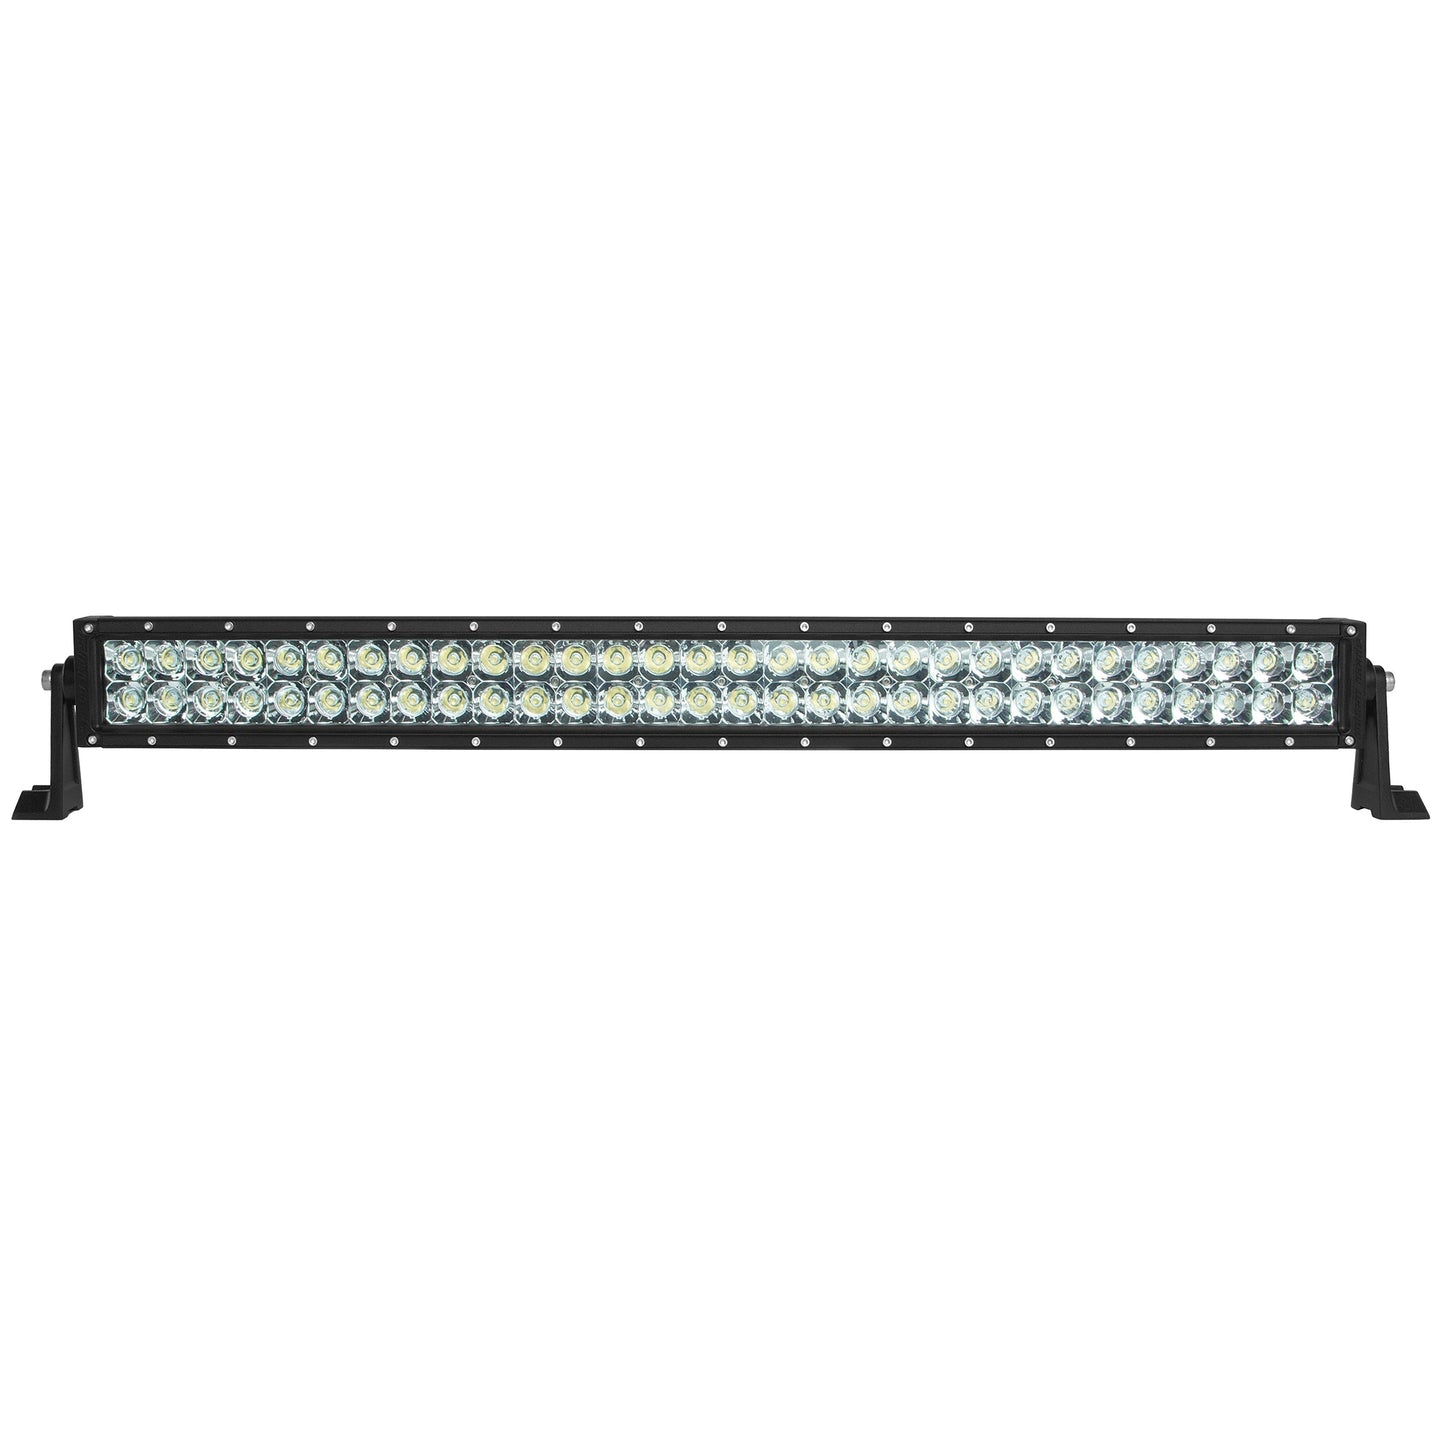 30" Dual Row LED Light Bar - DRC30